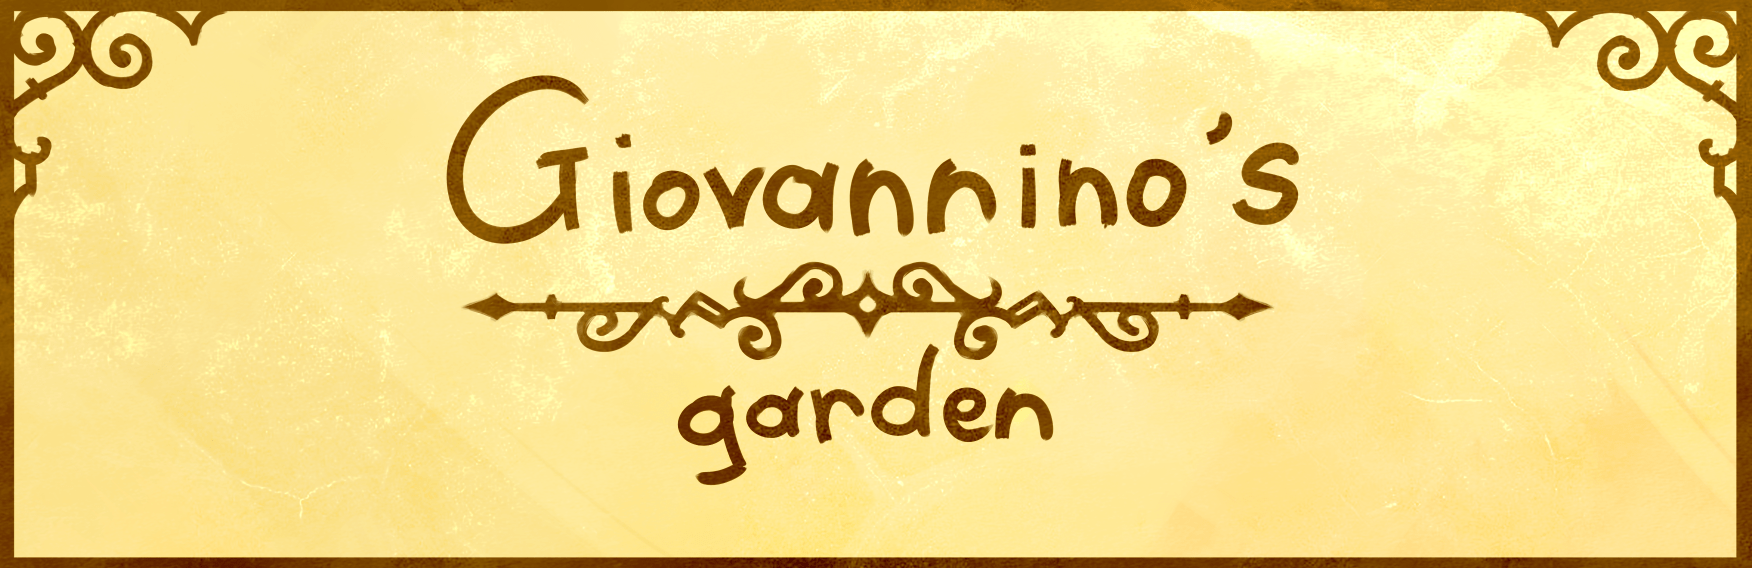 Giovannino's garden